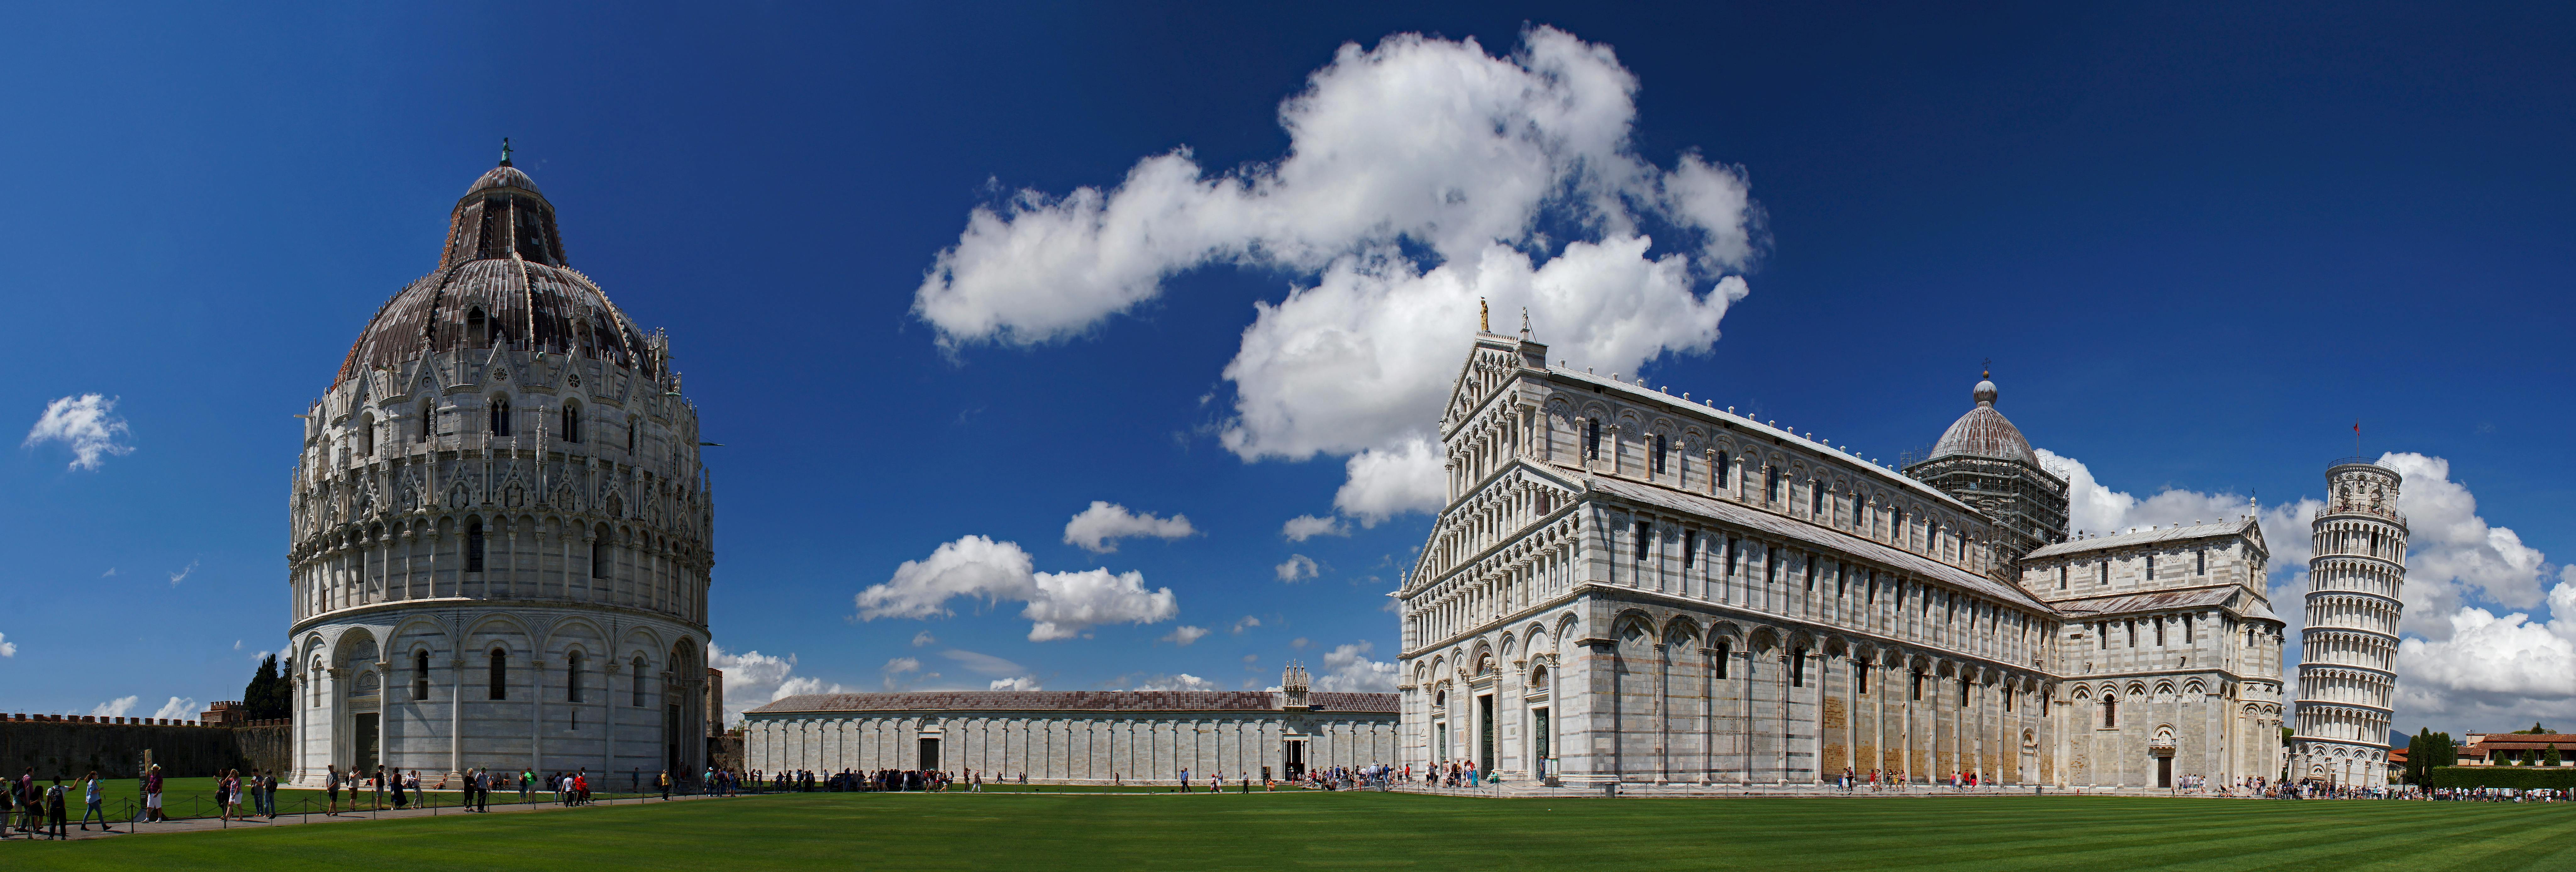 7 Wonders of Pisa verkenningsspel en tour